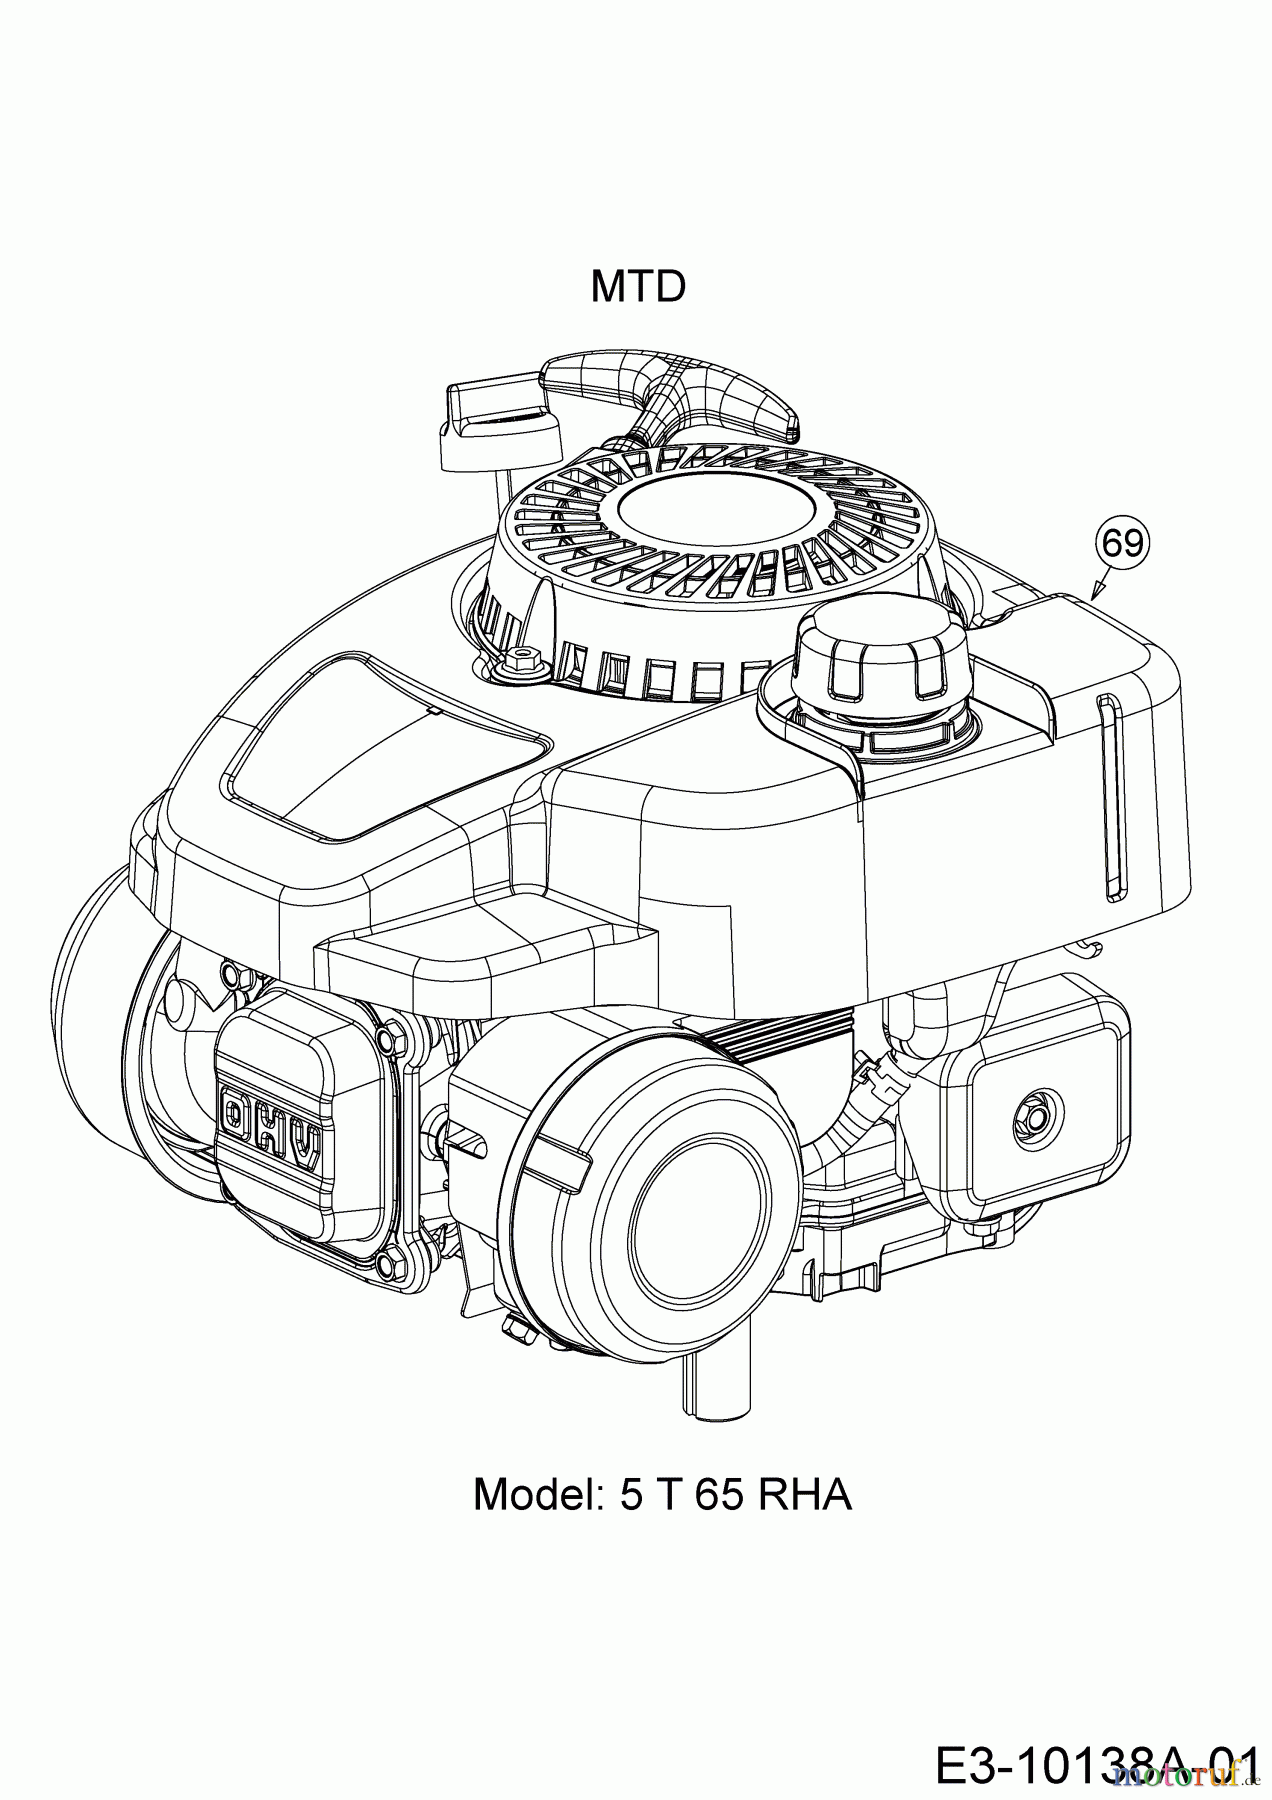  Cub Cadet Petrol mower LM1 CP46 11A-TQSC603  (2017) Engine MTD